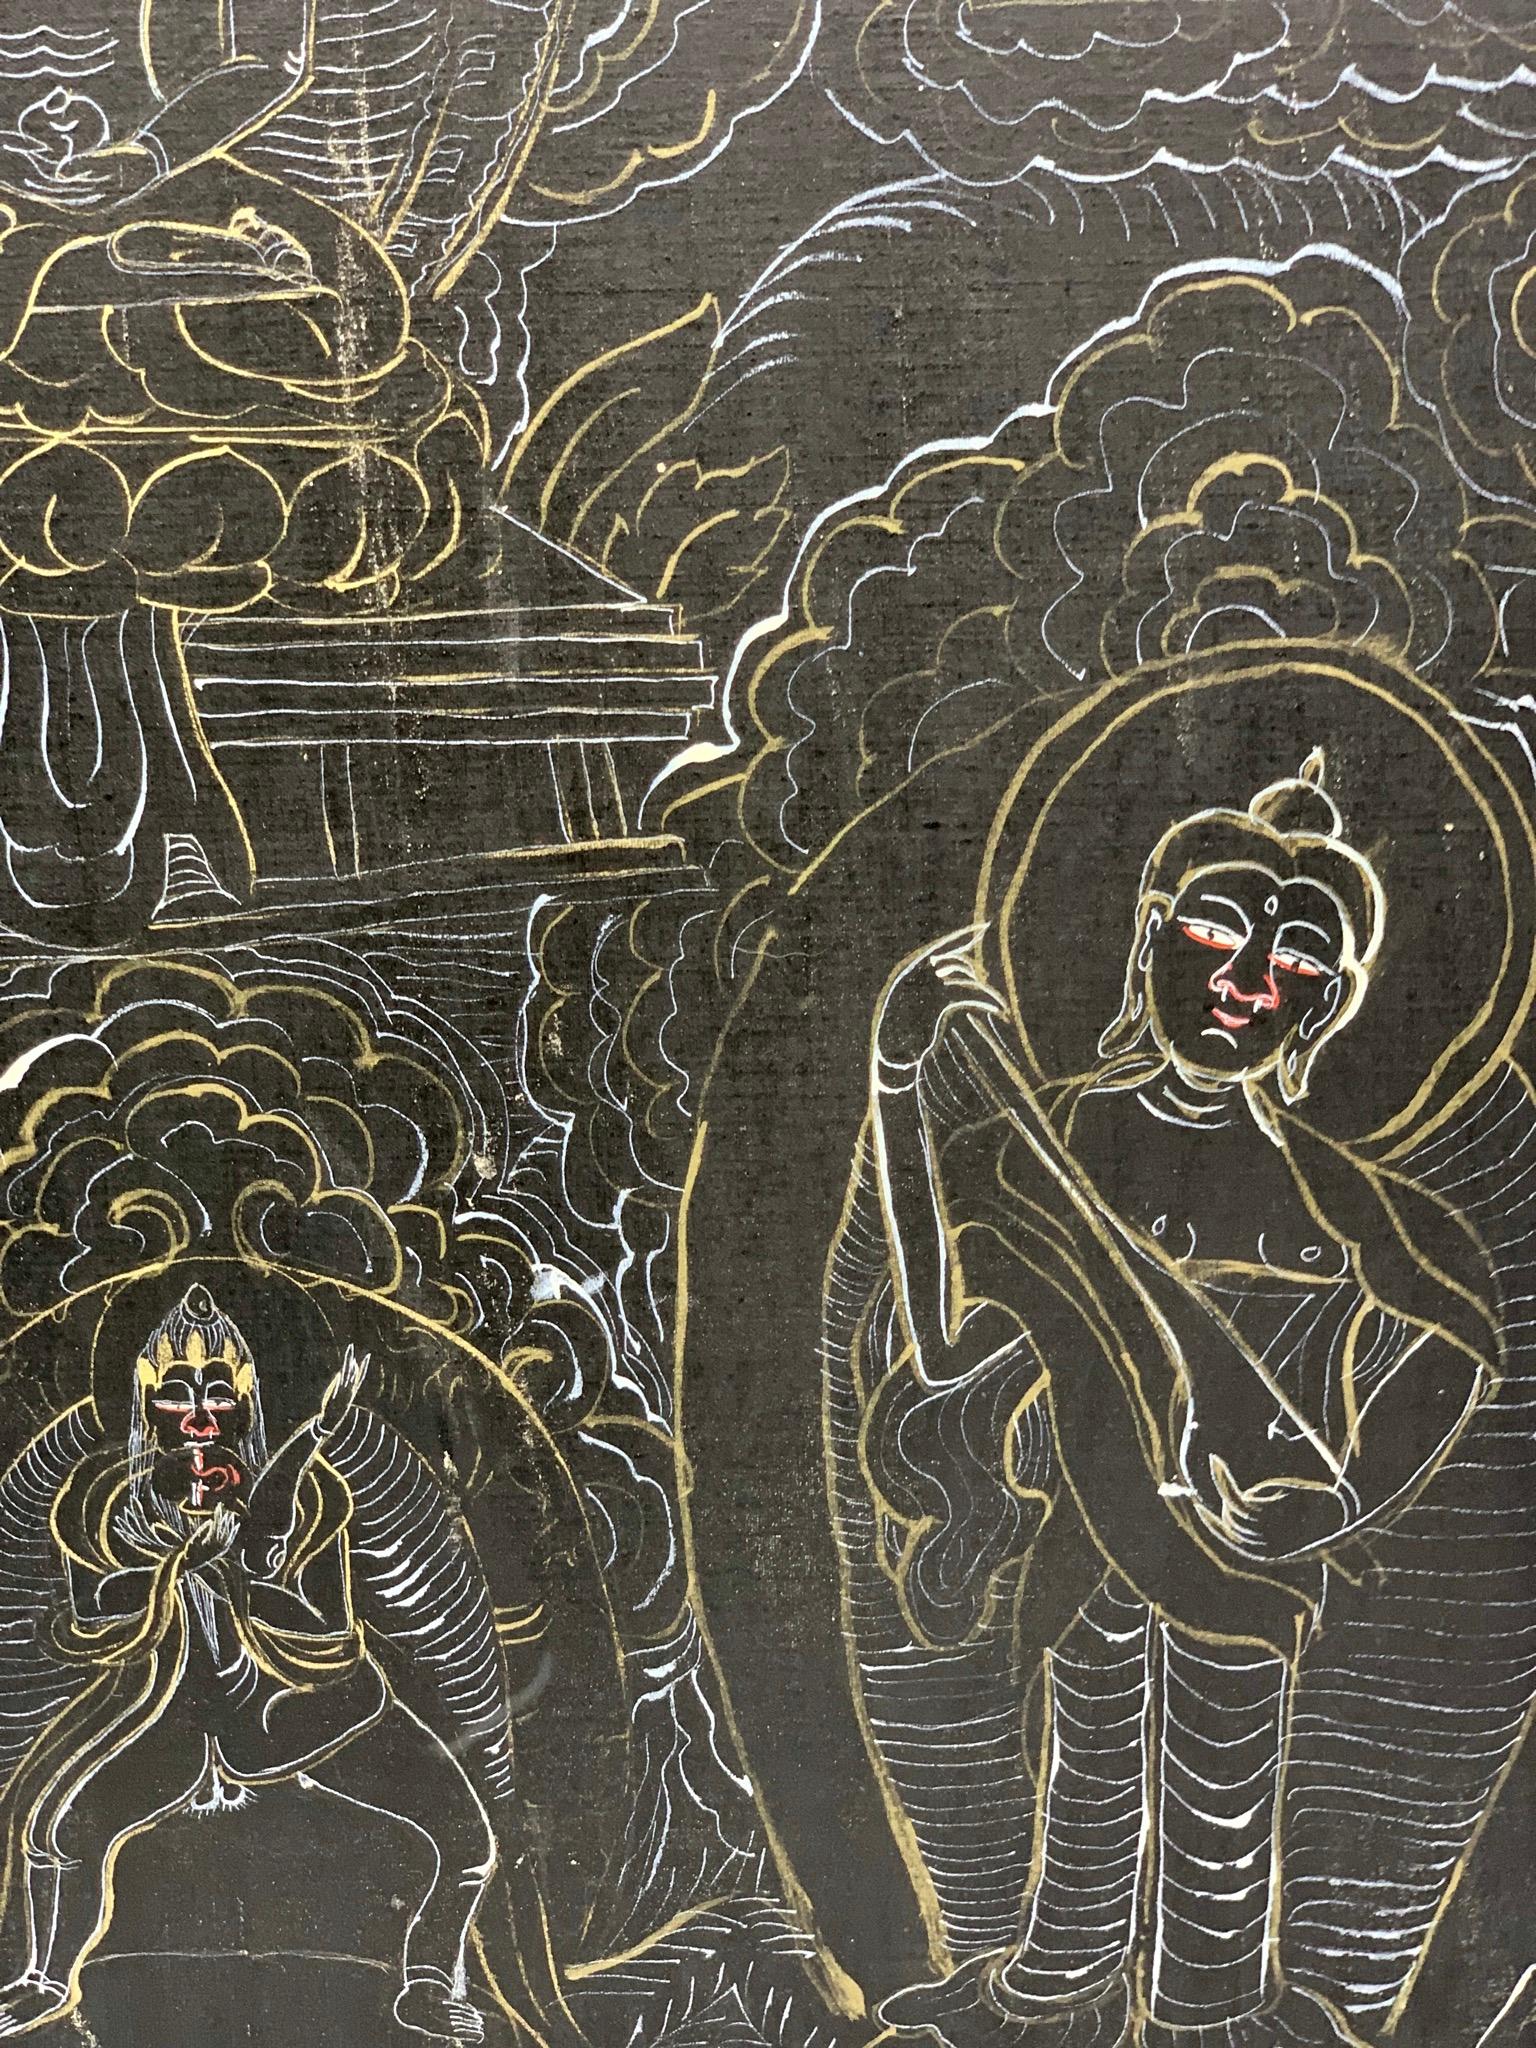 Wood Black and White Chinese Mandala with Scenes of Buddha